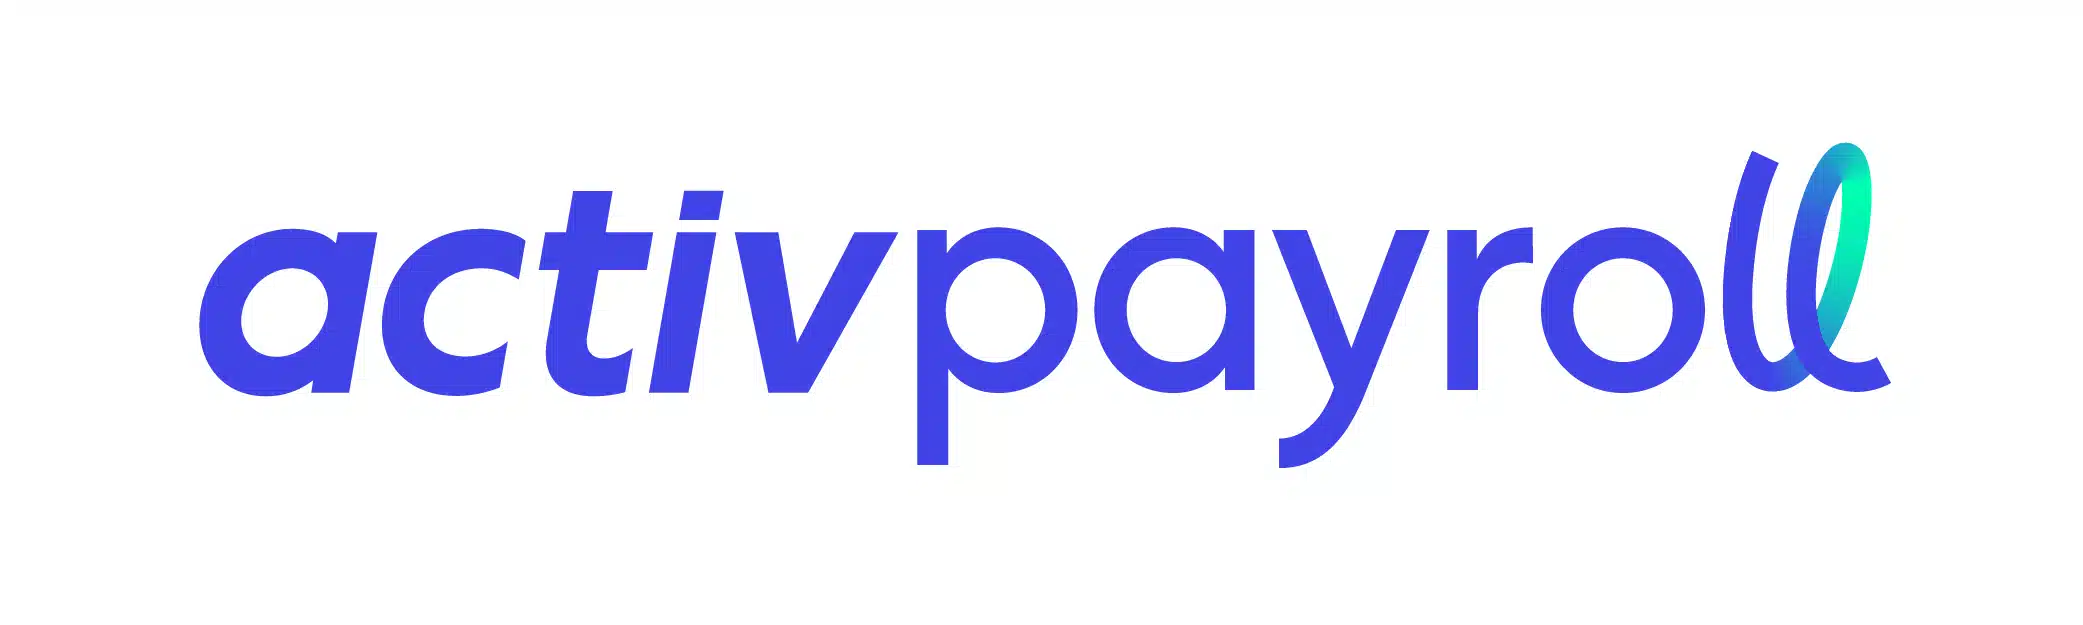 activpayroll Ltd logo